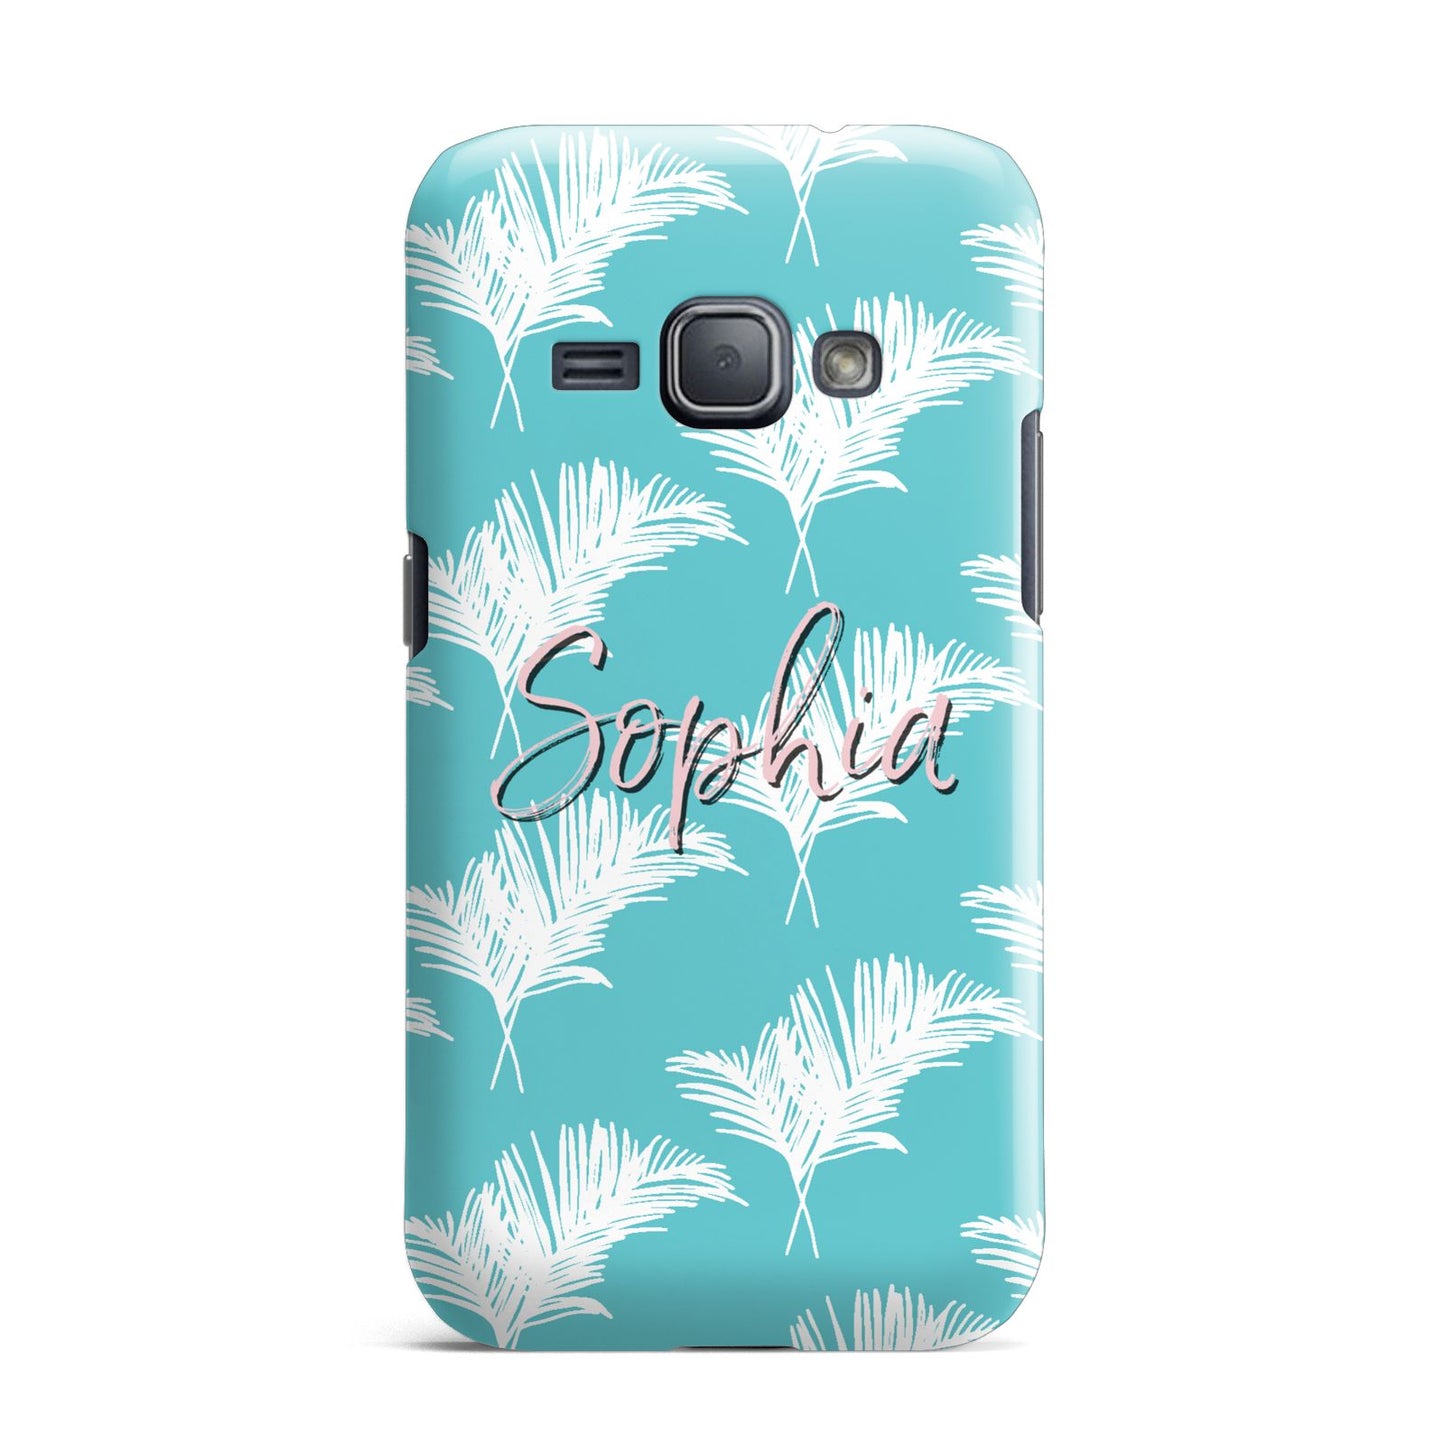 Personalised Blue White Tropical Foliage Samsung Galaxy J1 2016 Case